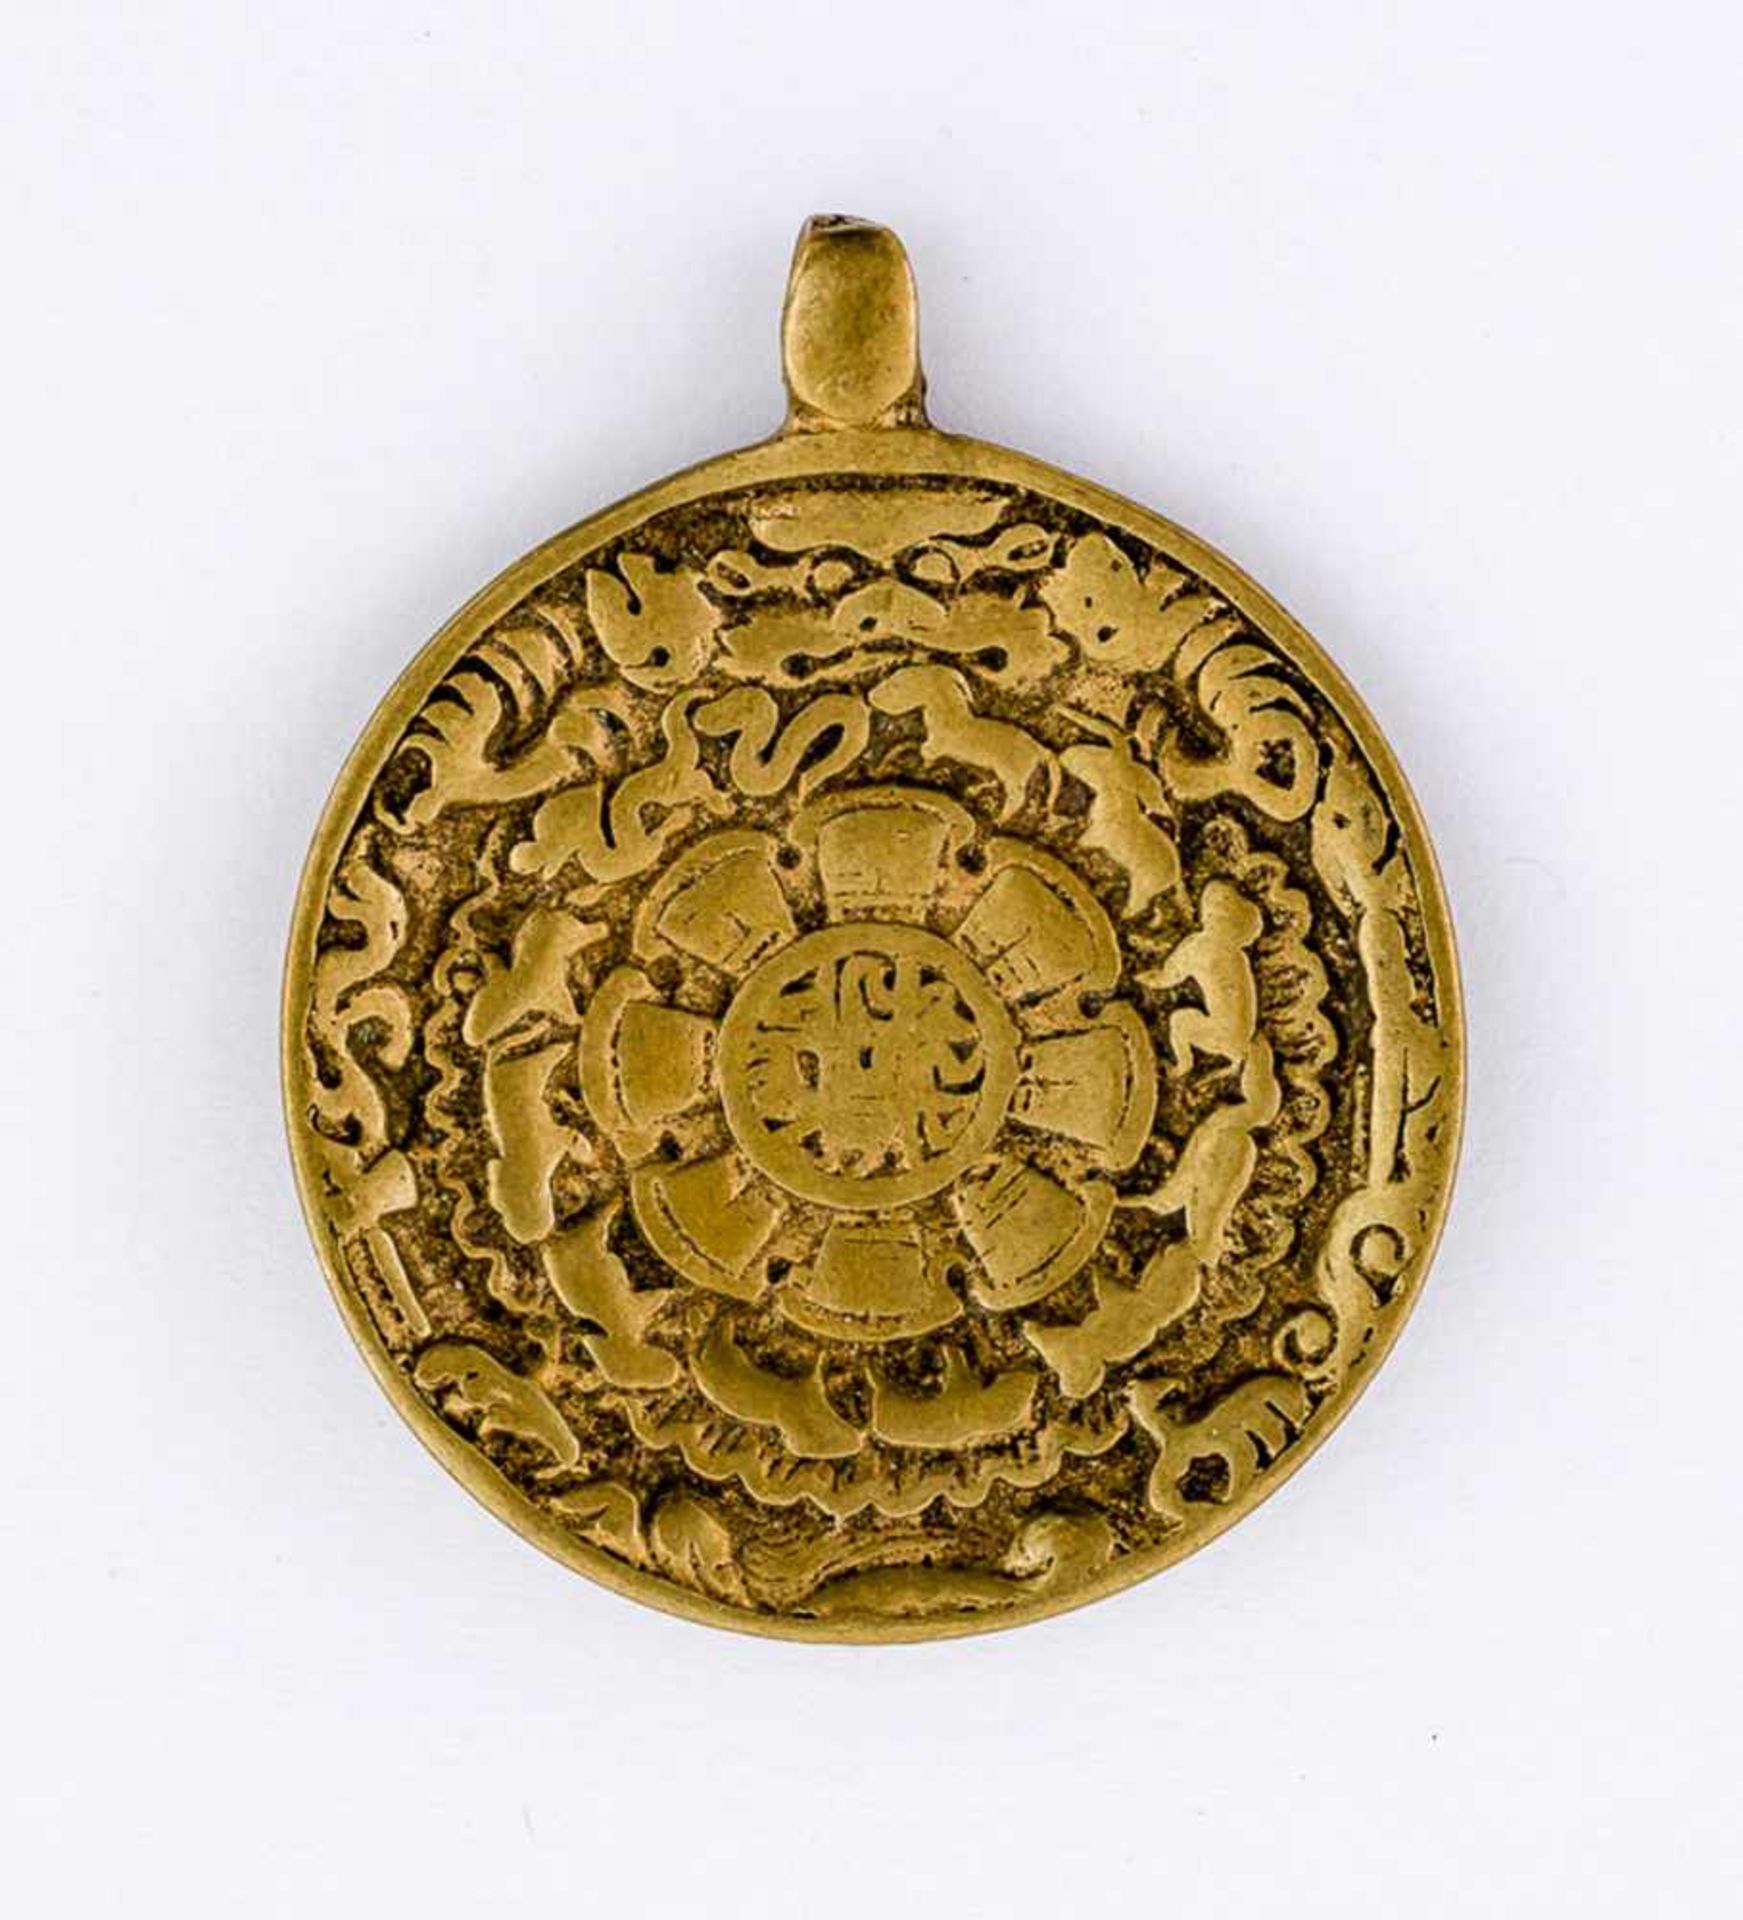 Kalender Nepal, Messing, wohl 19. Jh. 5 x 4,2 cm Calendar, Nepal, brass, probaly 19th c., 5 x 4,2 cm